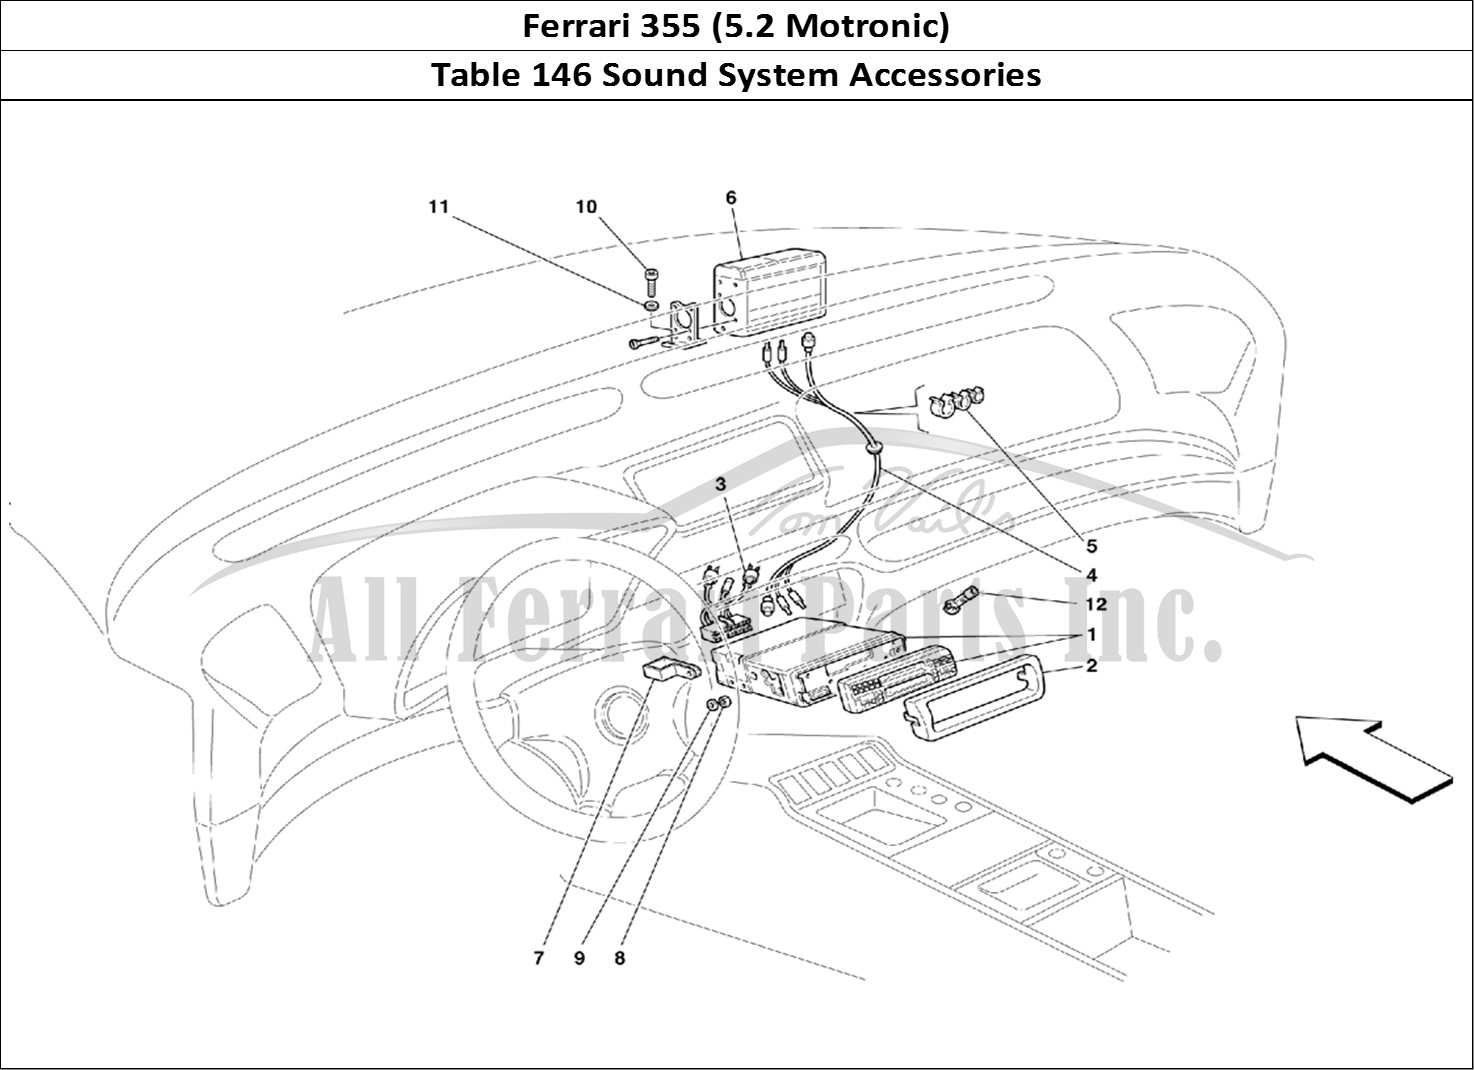 Ferrari Parts Ferrari 355 (5.2 Motronic) Page 146 Stereo Equipment